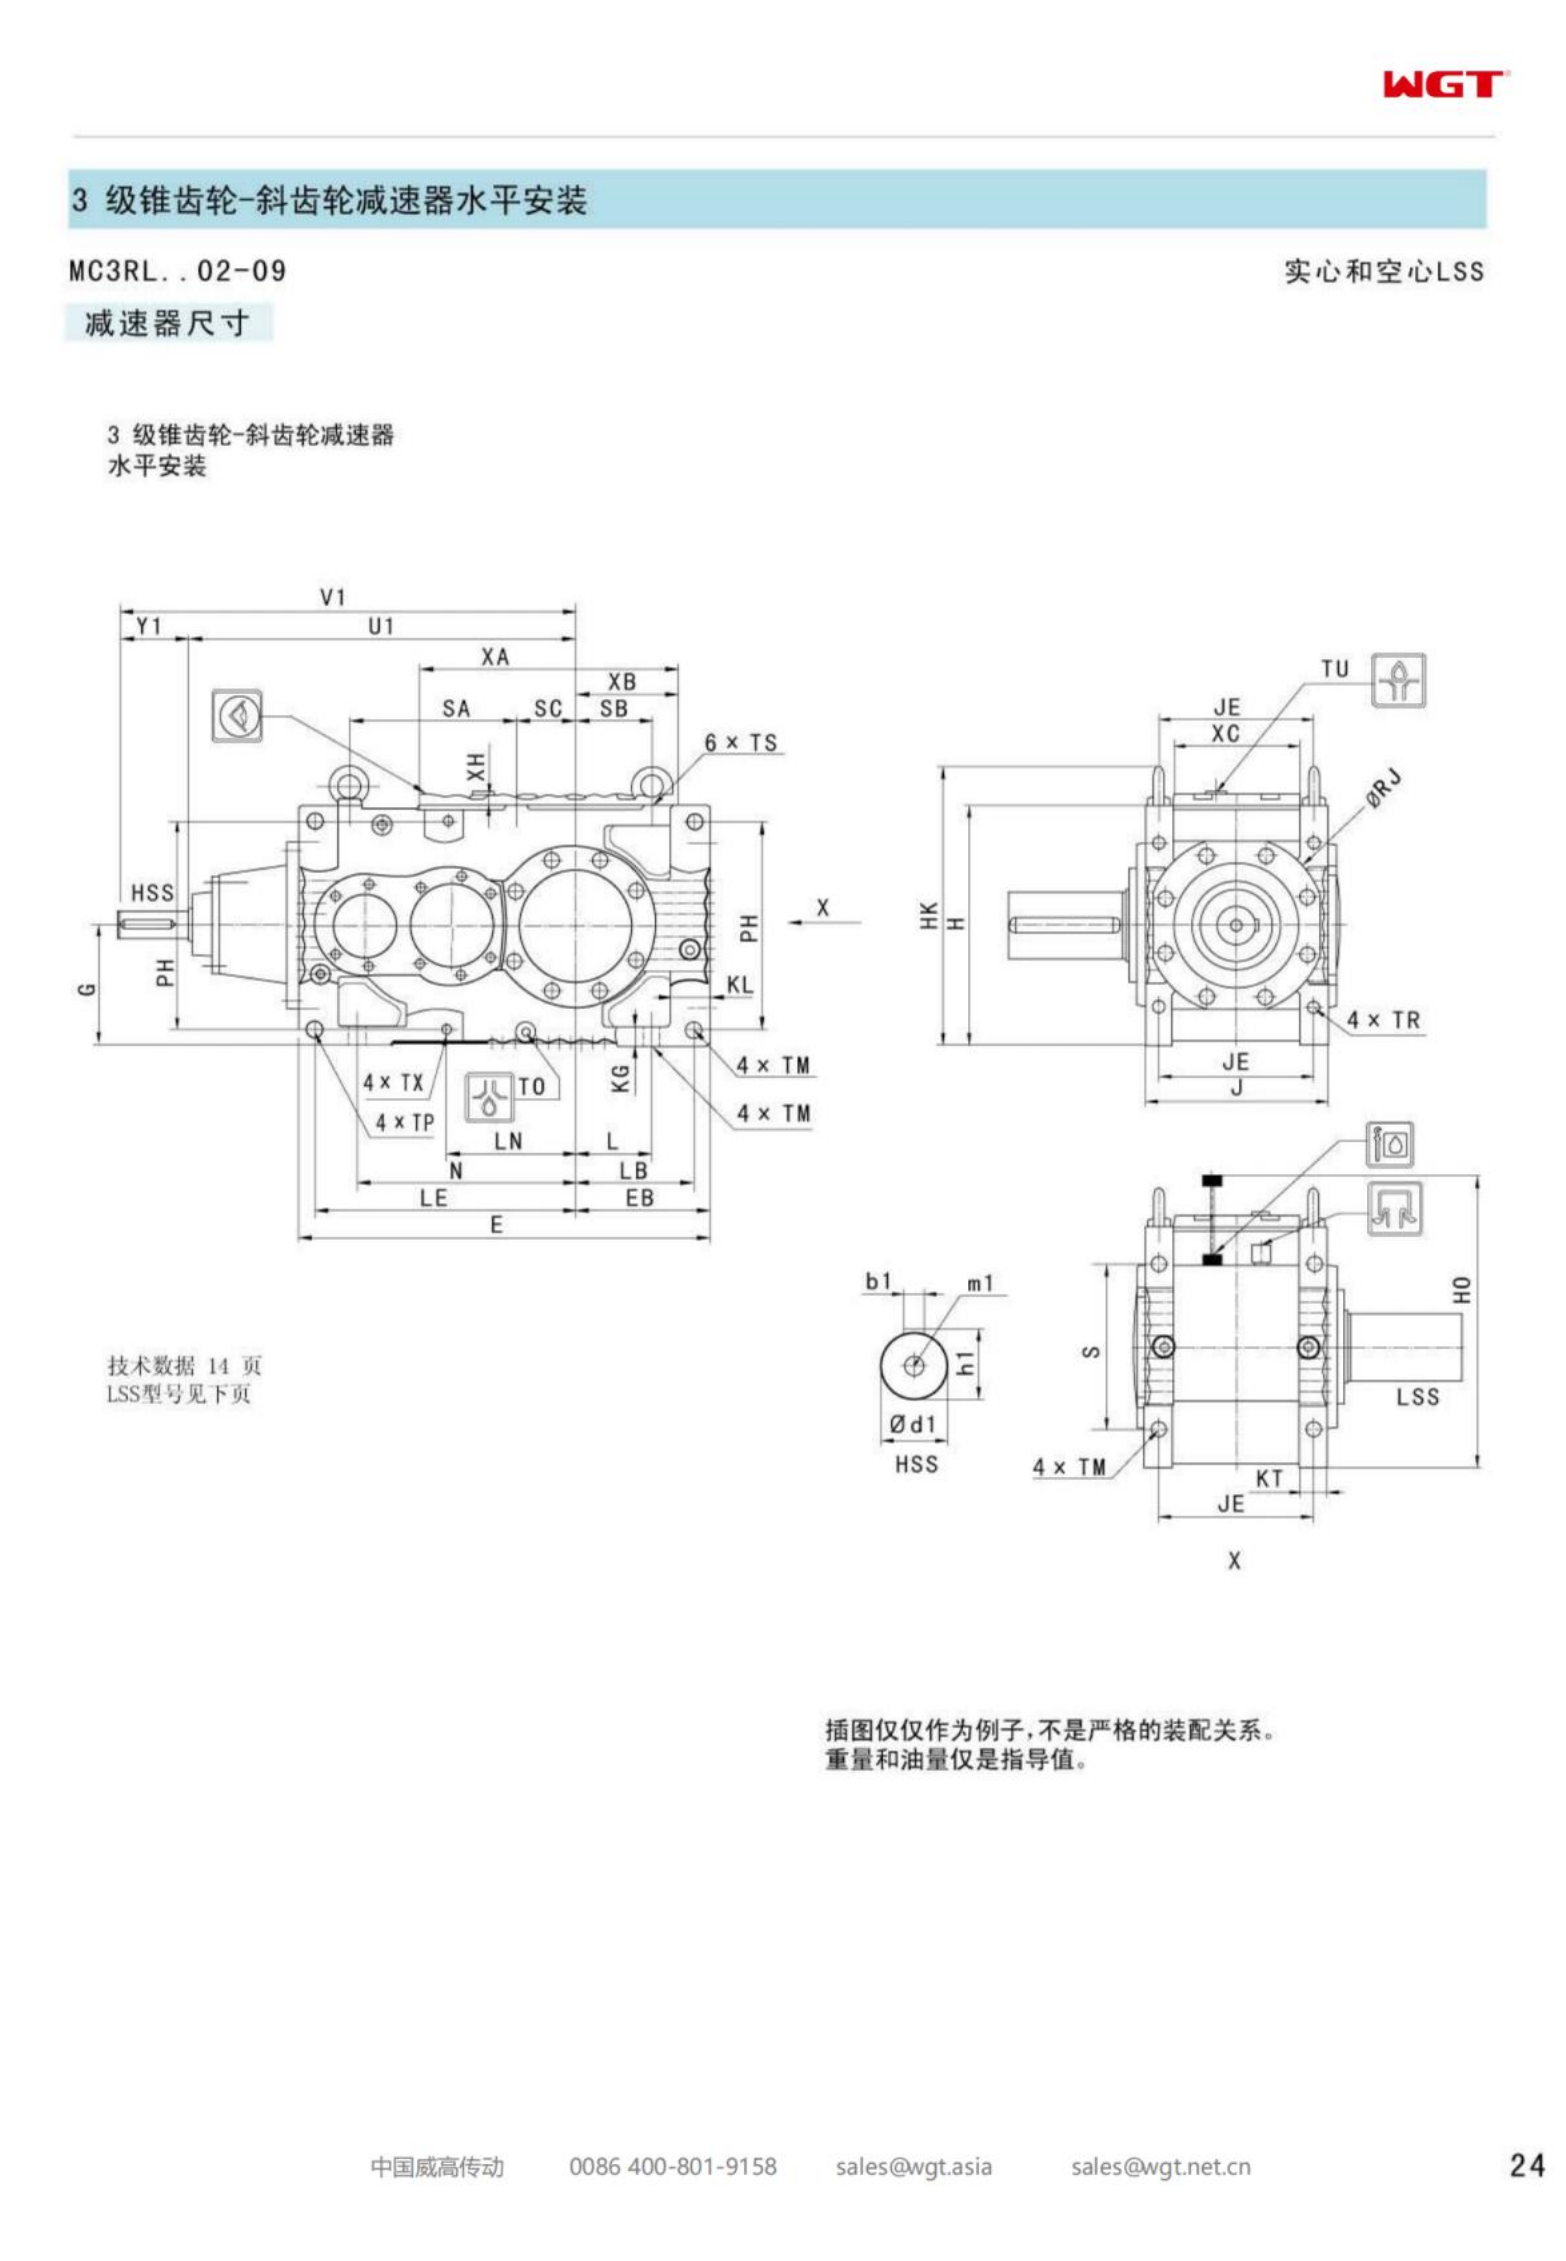 MC3RLSF06 replaces _SEW_MC_Series gearbox (patent)